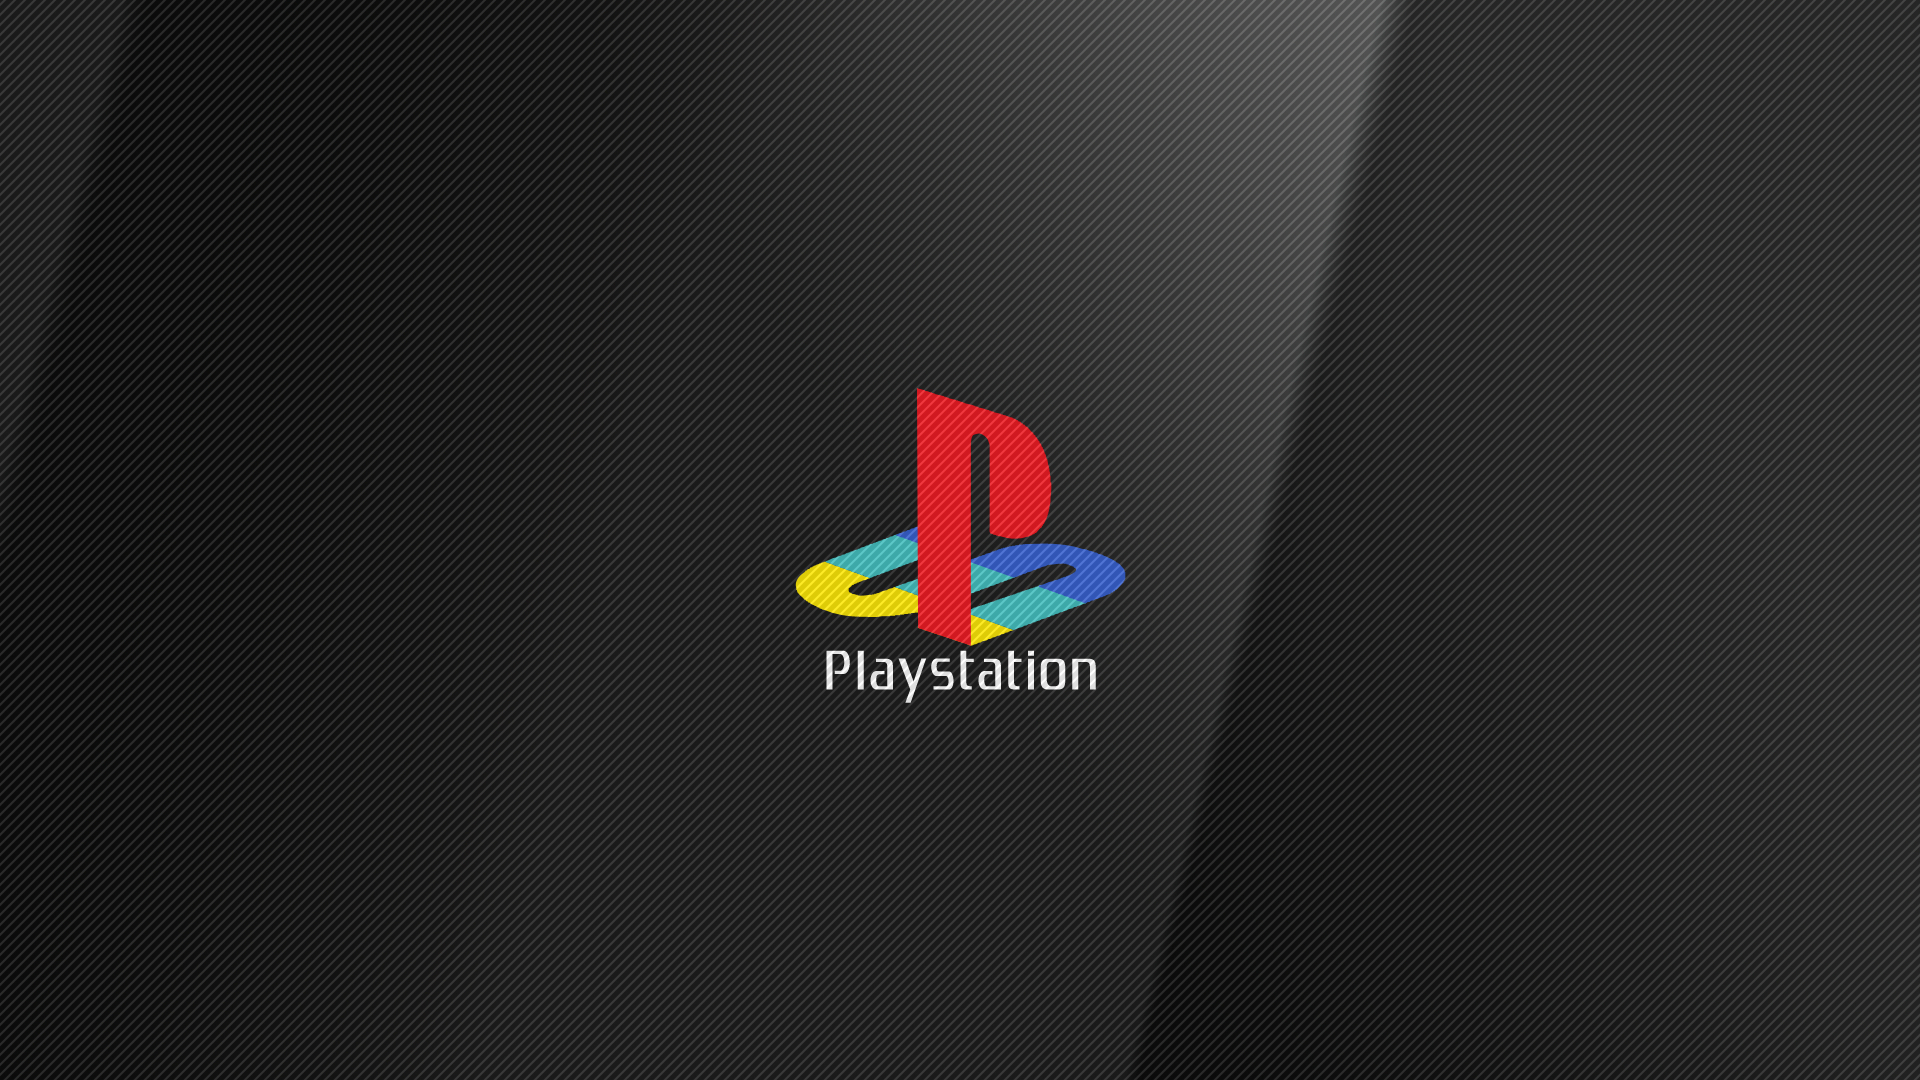 Sony Playstation Logo desktop PC and Mac wallpaper